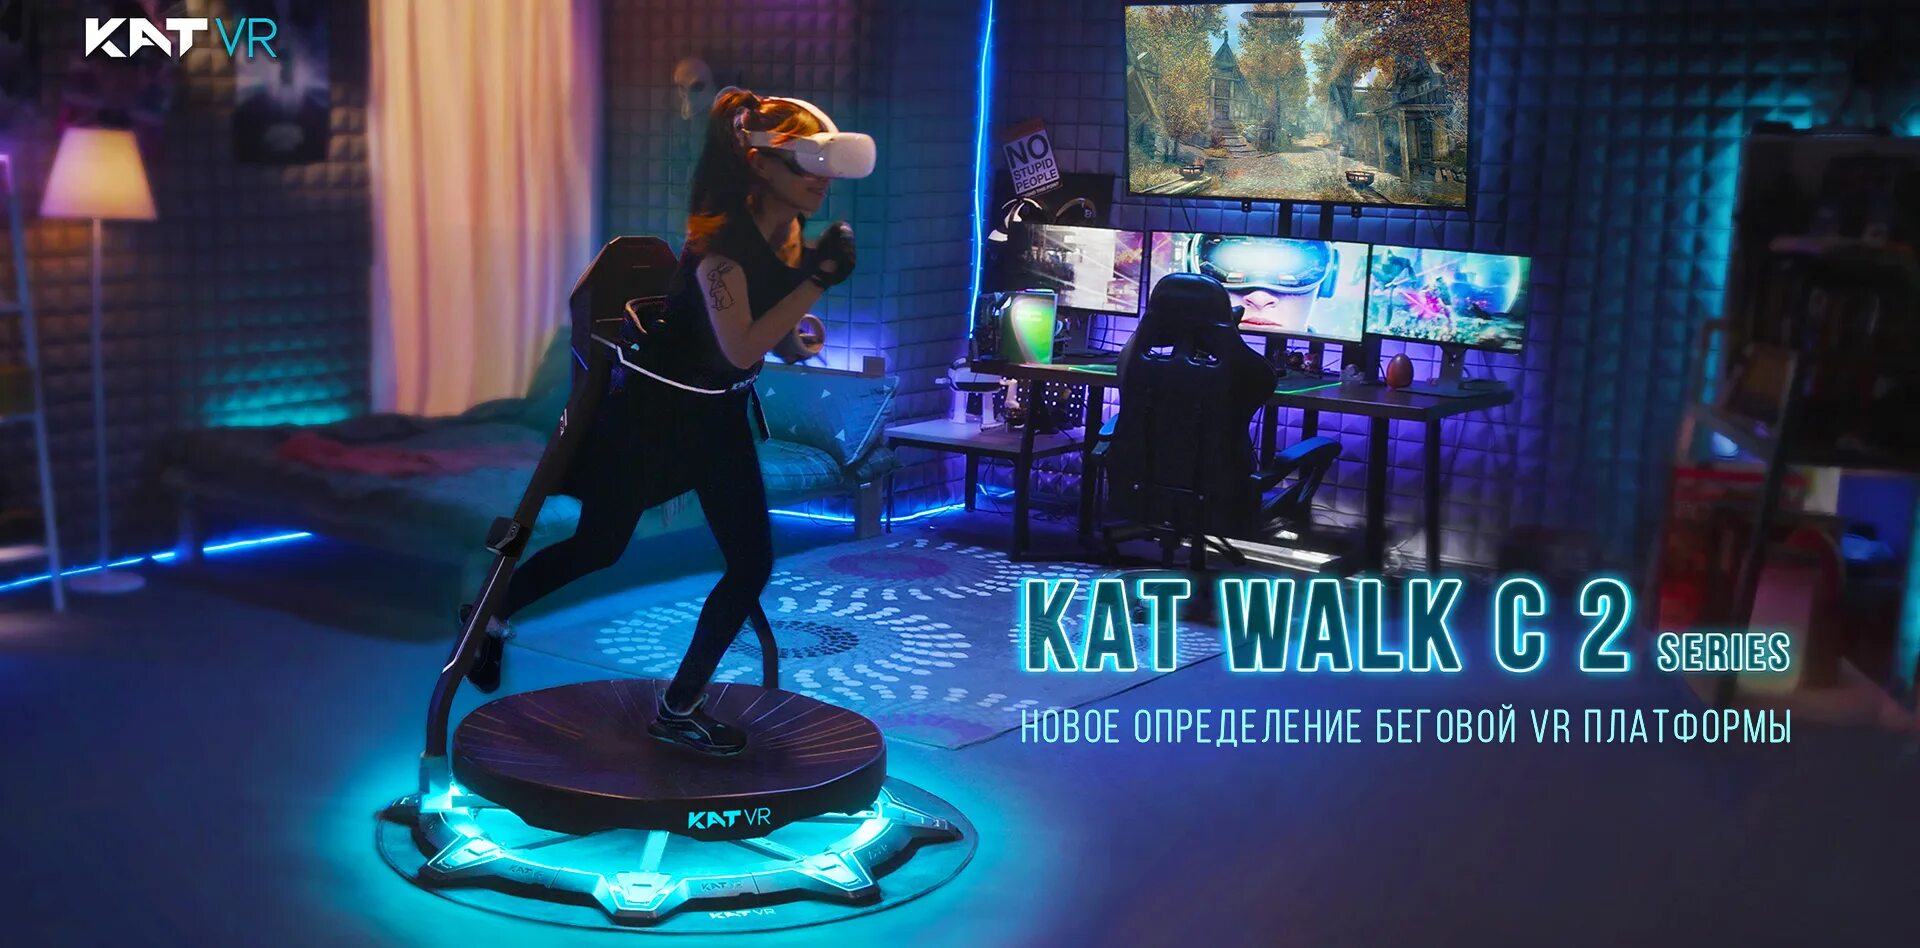 Kat vr. VR Беговая платформа. Kat walk c VR Treadmill. Kat walk c2+. Дорожка для виртуальной реальности.